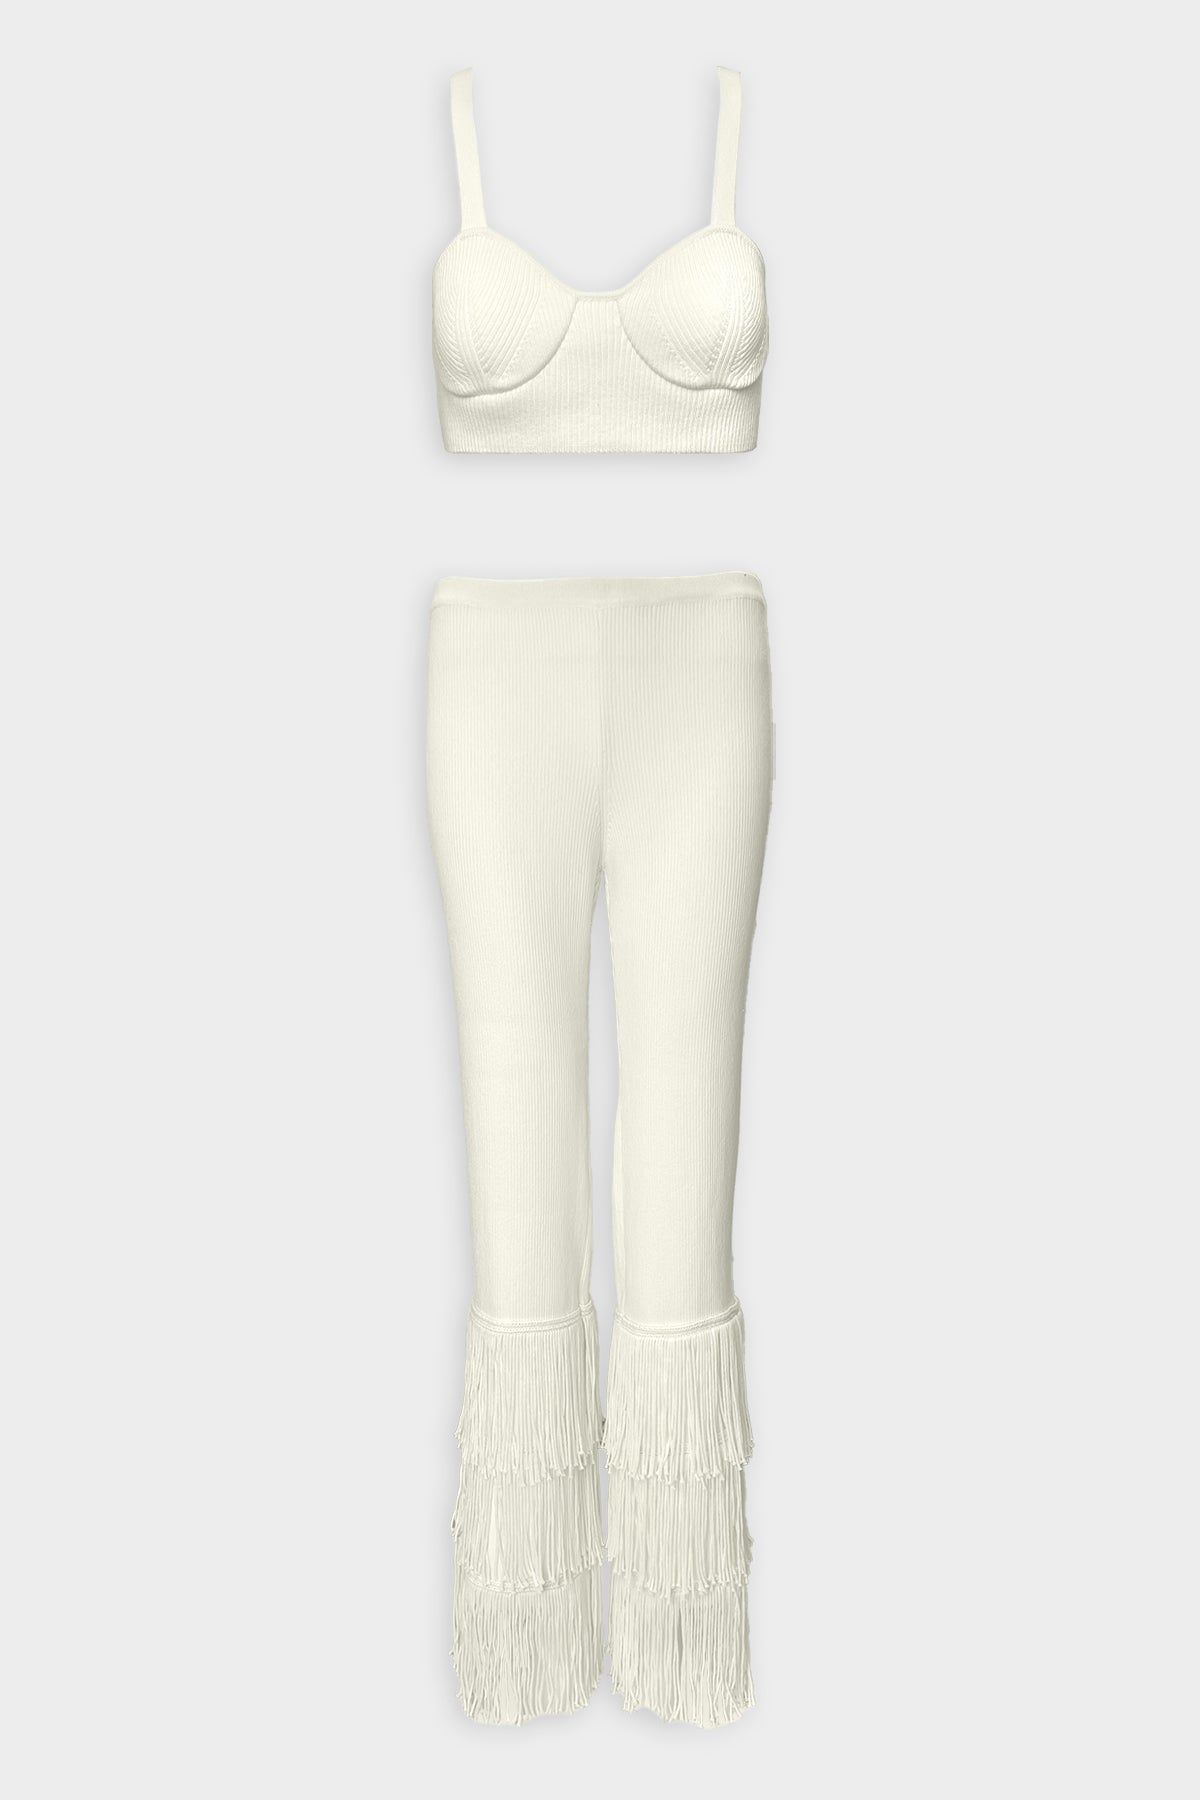 Noemi Knitwear Top and Pant Set in Panna - shop-olivia.com